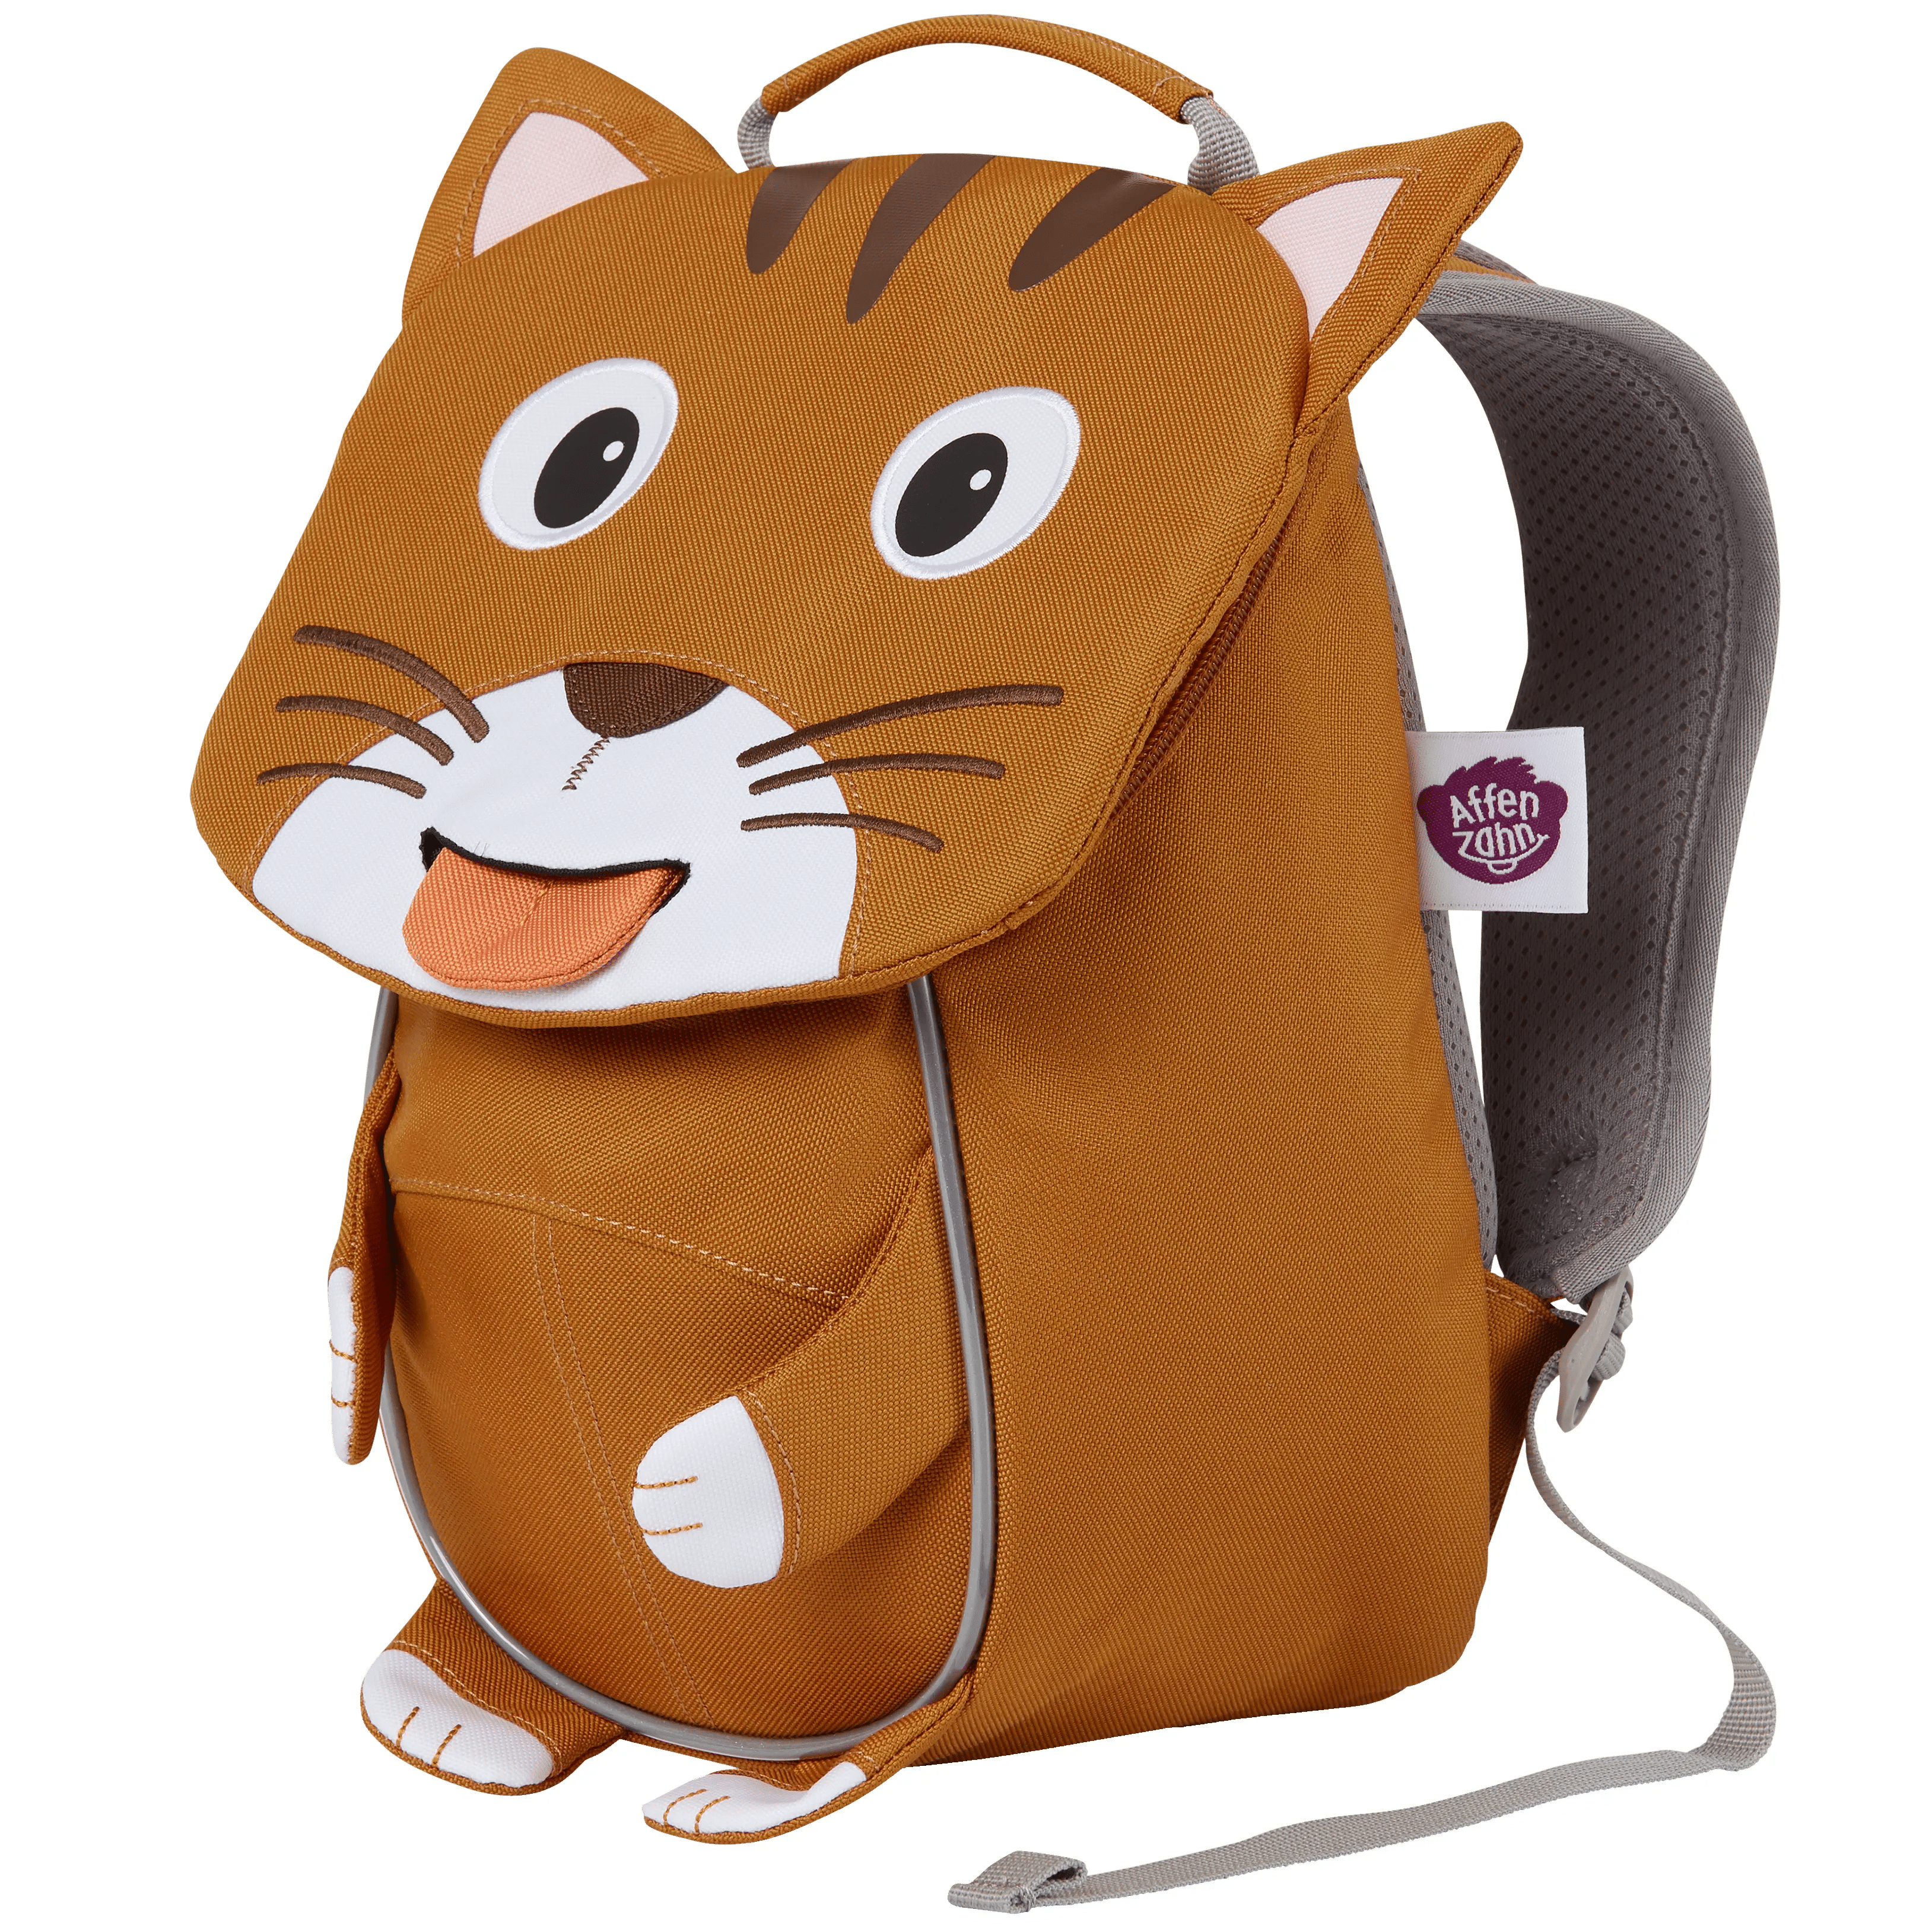 Affenzahn Small Friend children's backpack 27 cm - cat